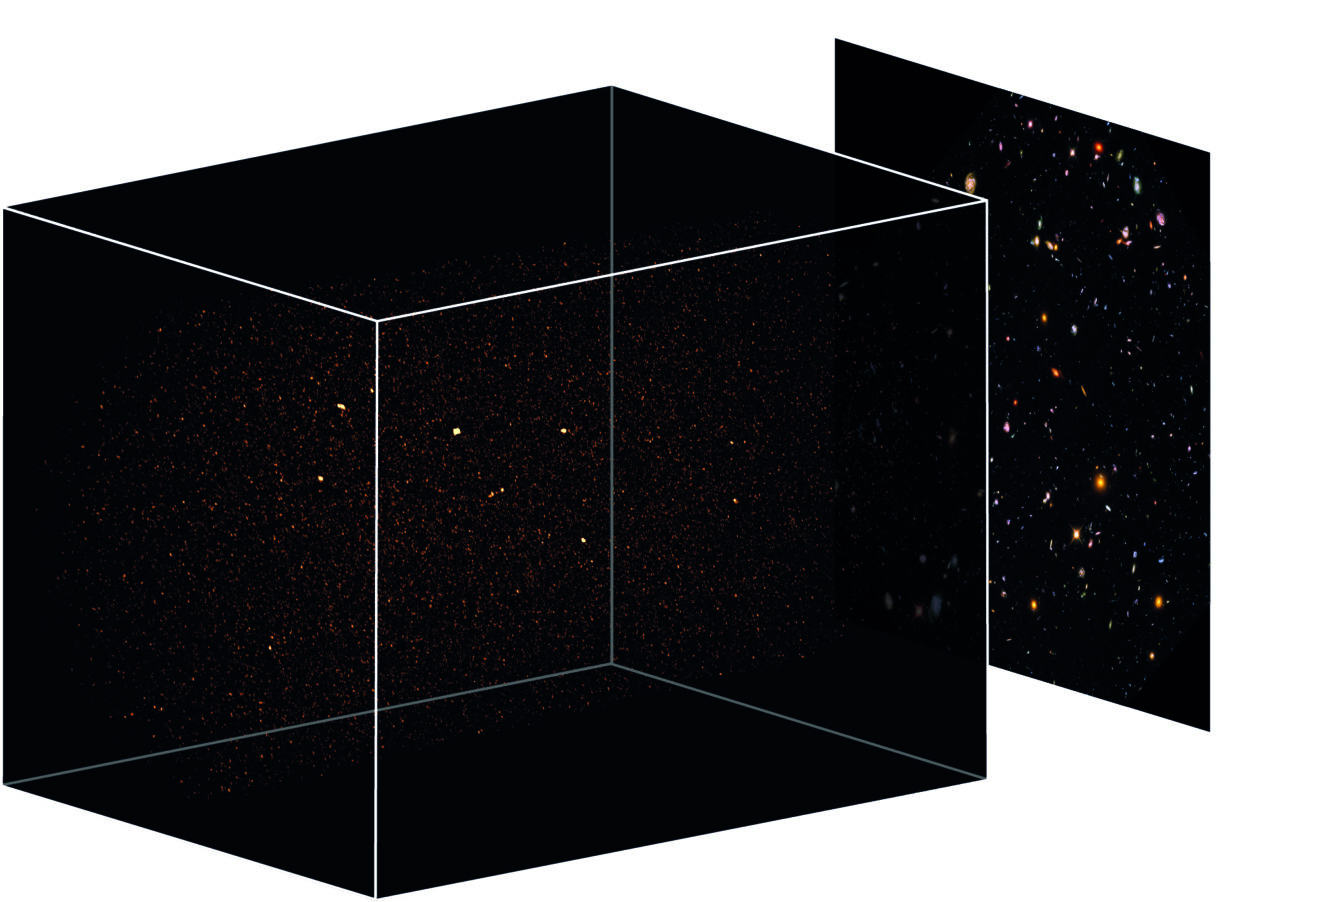 Leidse onderzoekers brengen vorming van sterrenstelsels in beeld